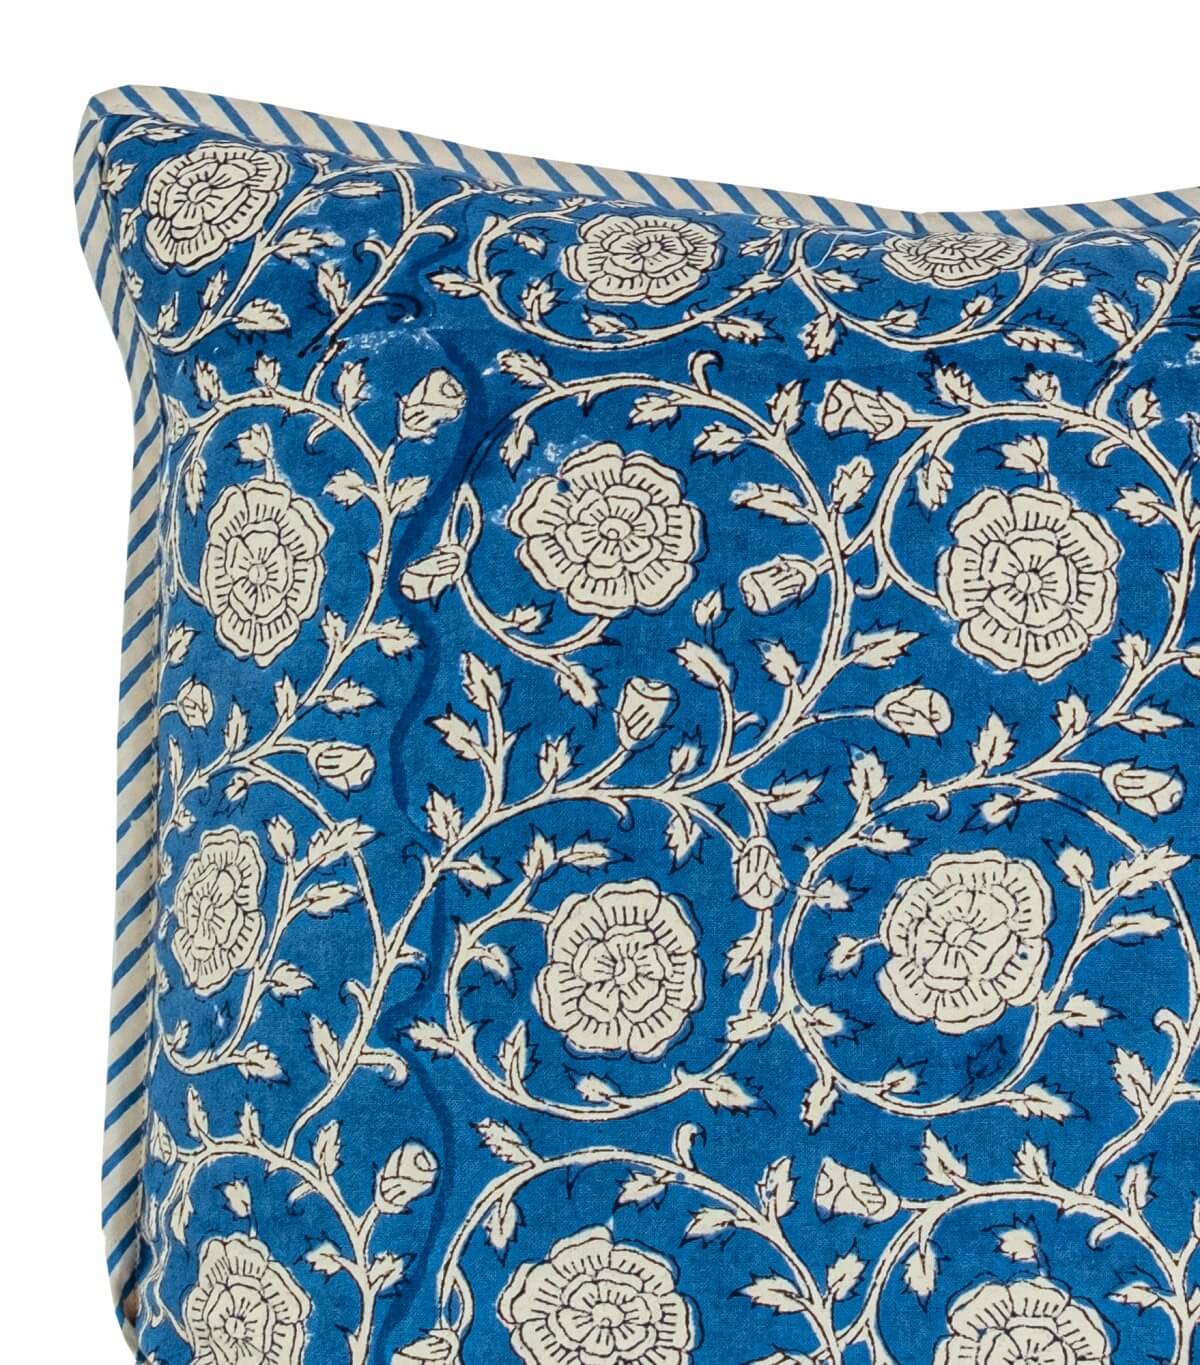 Cushion cover 24x24 inches - blue